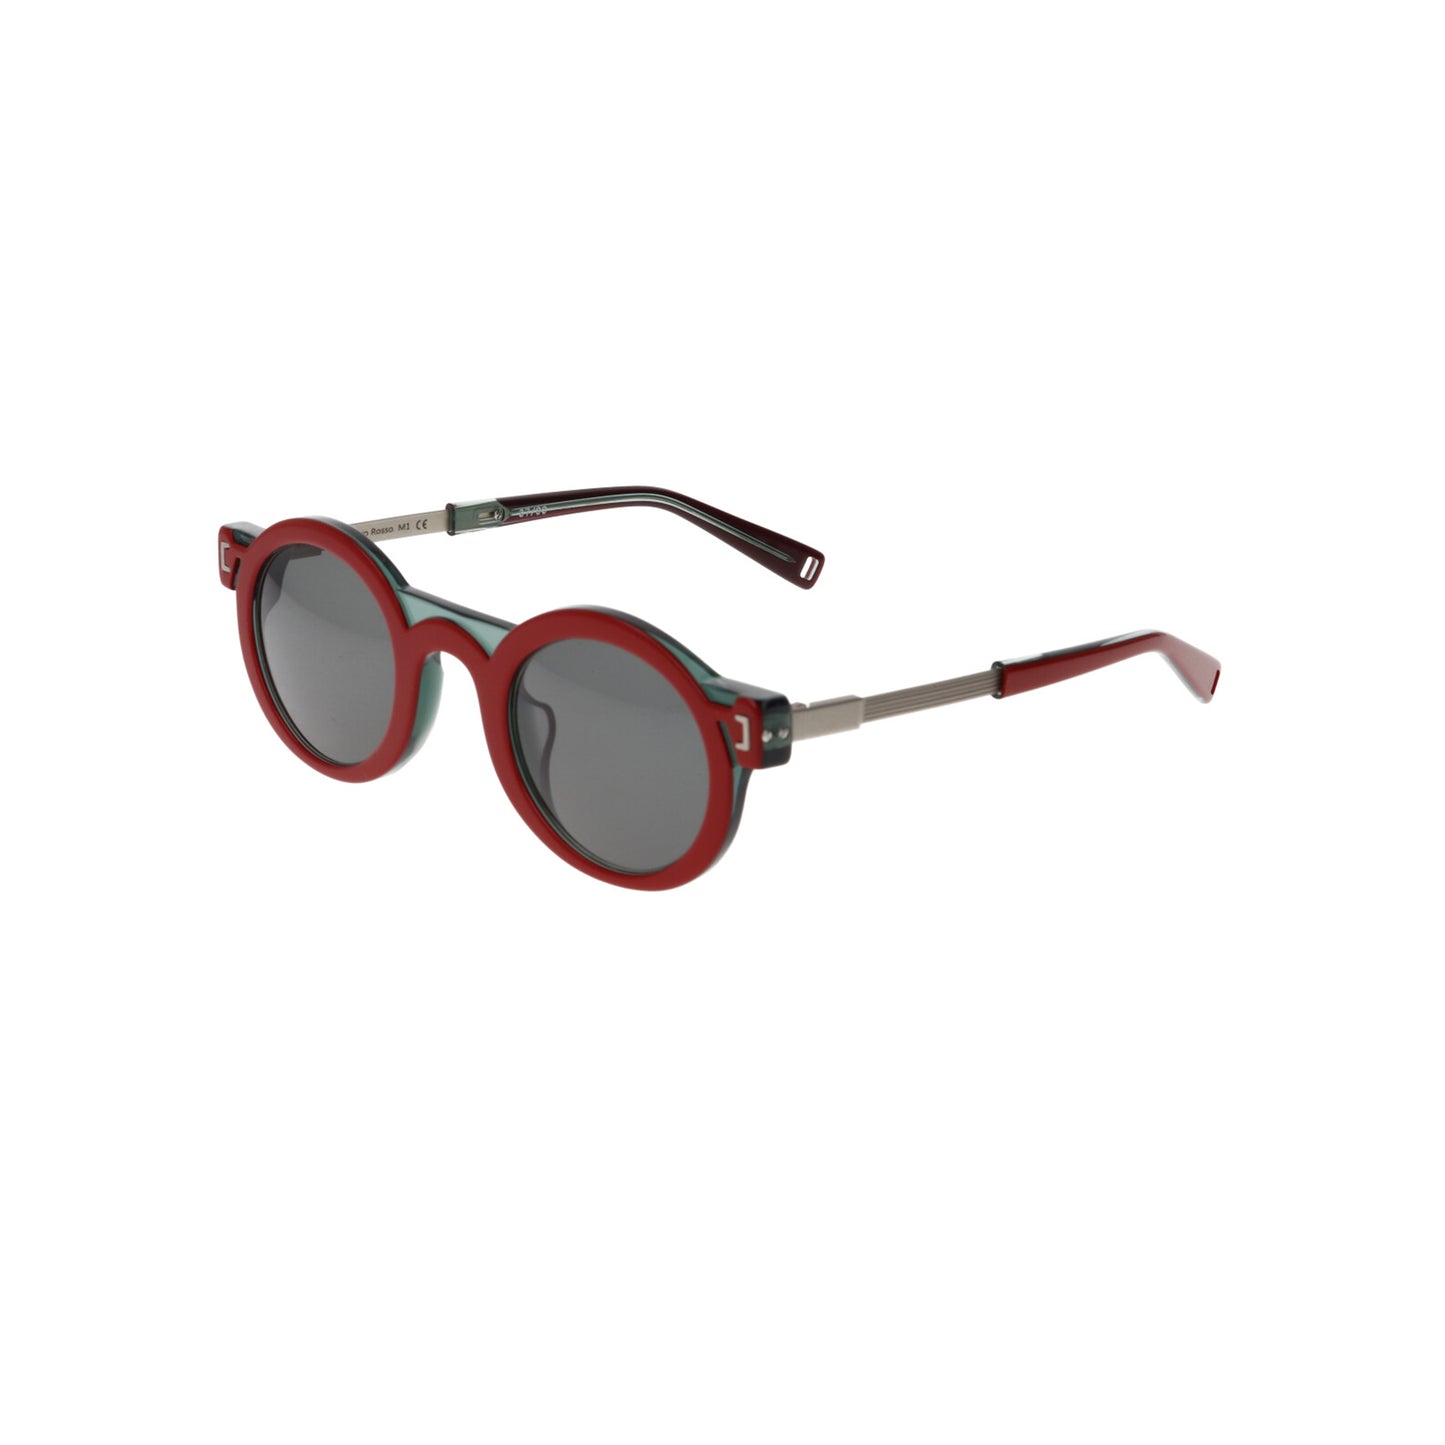 Kilometro Rosso M1 Sunglasses